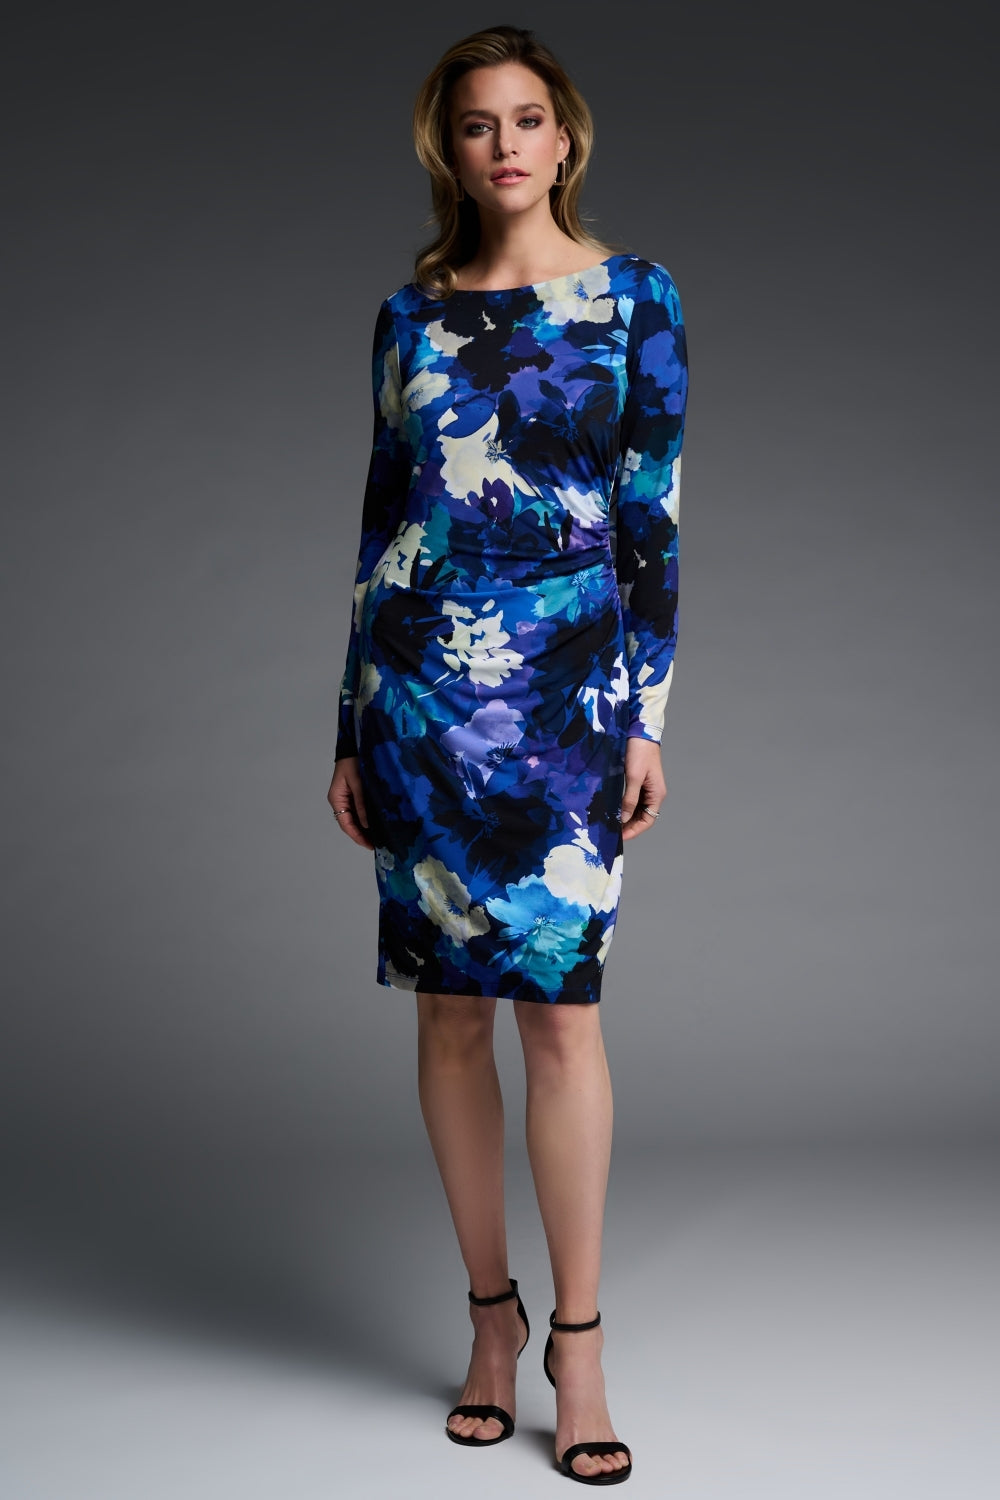 Blue Floral Print Dress 223731